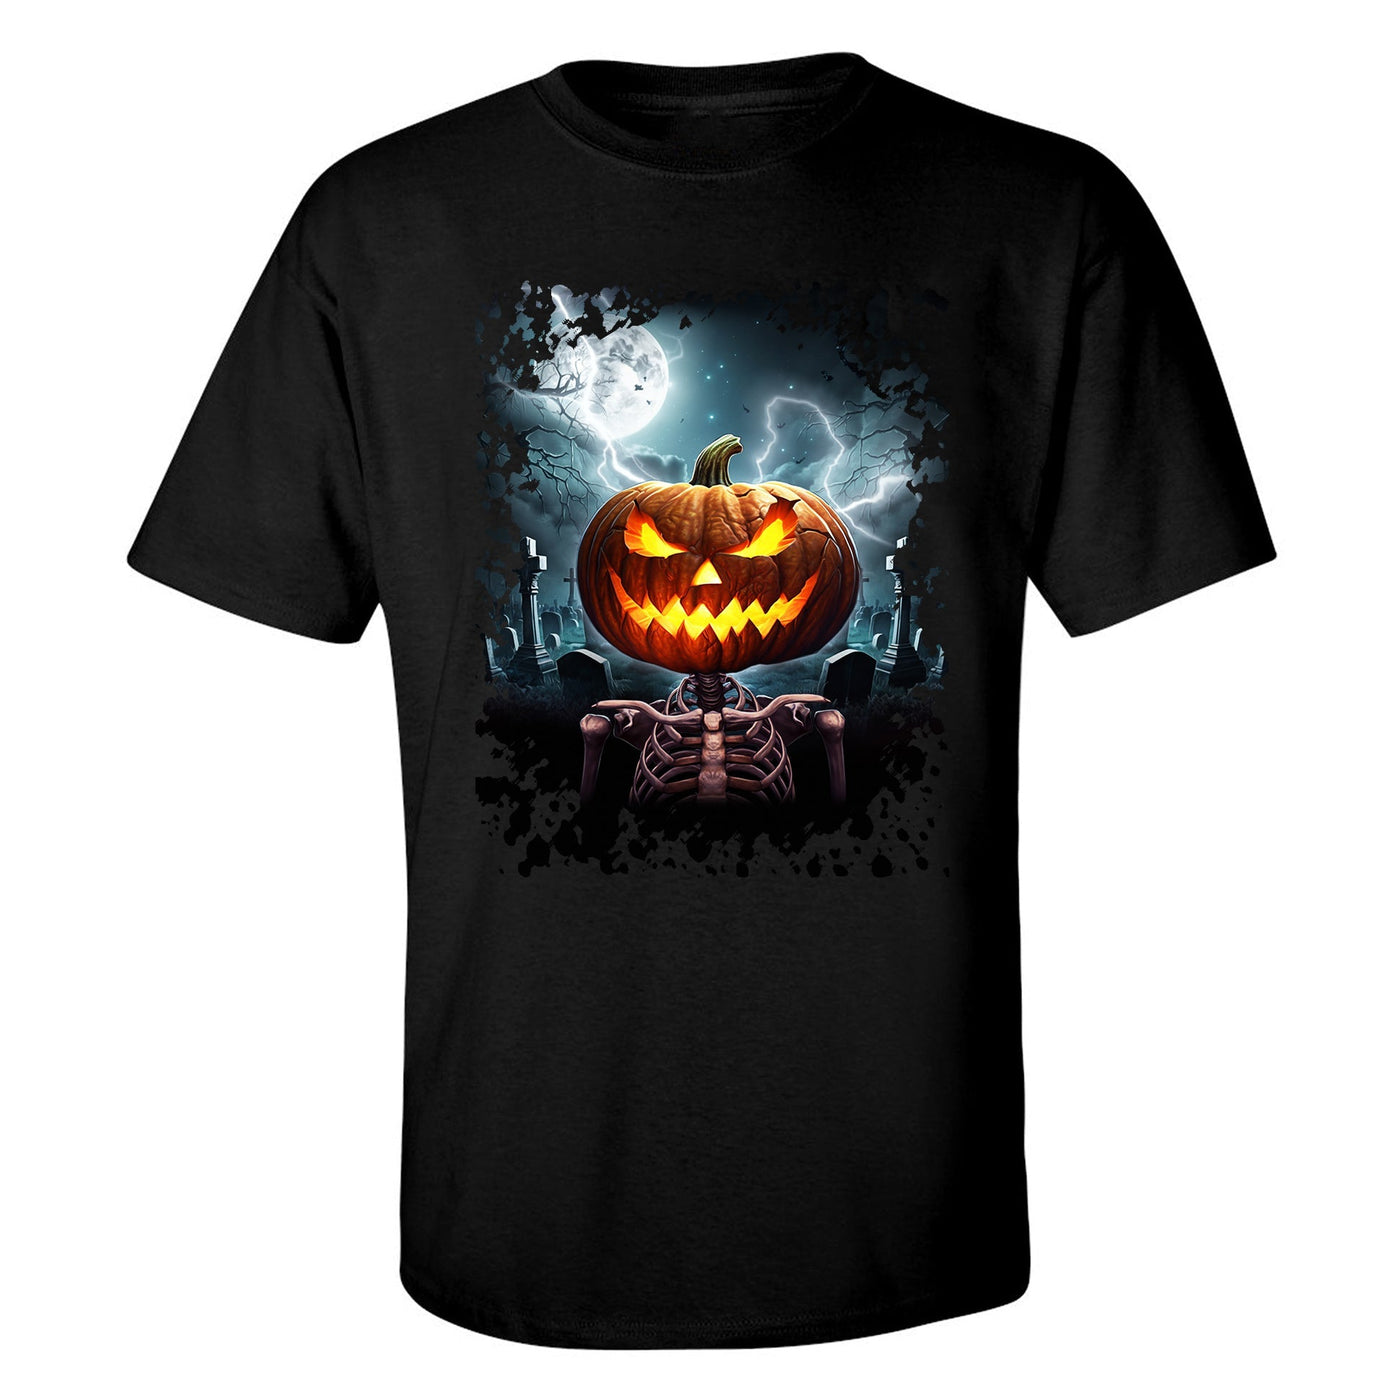 SPECIAL Zobie Exclusive "Evil Pumpkin" Short Sleeve T-Shirt